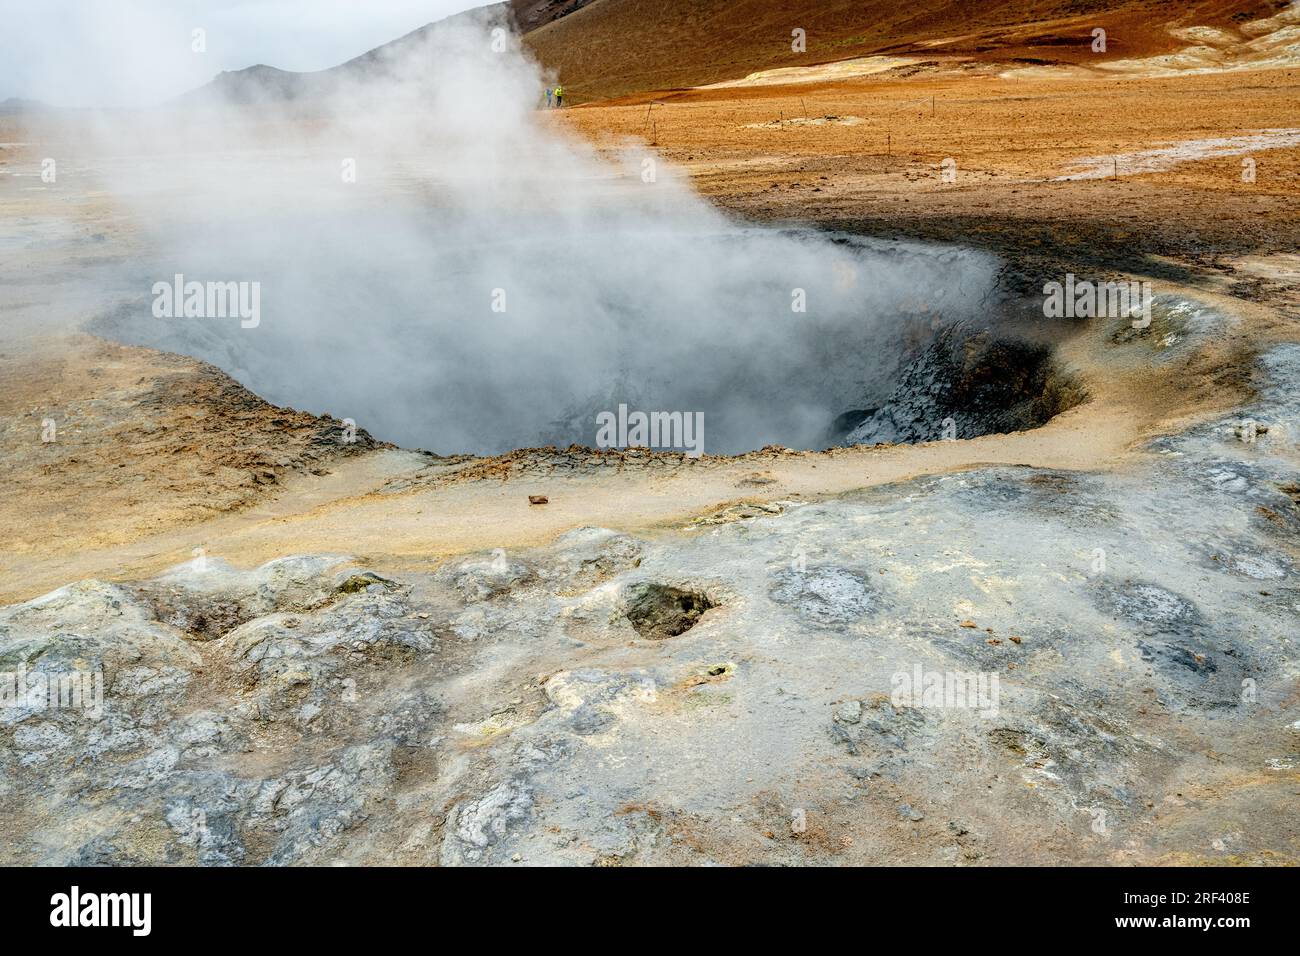 Piscine di fango bollenti, area geotermale di Hverir, vicino al lago Mývatn, Islanda Foto Stock